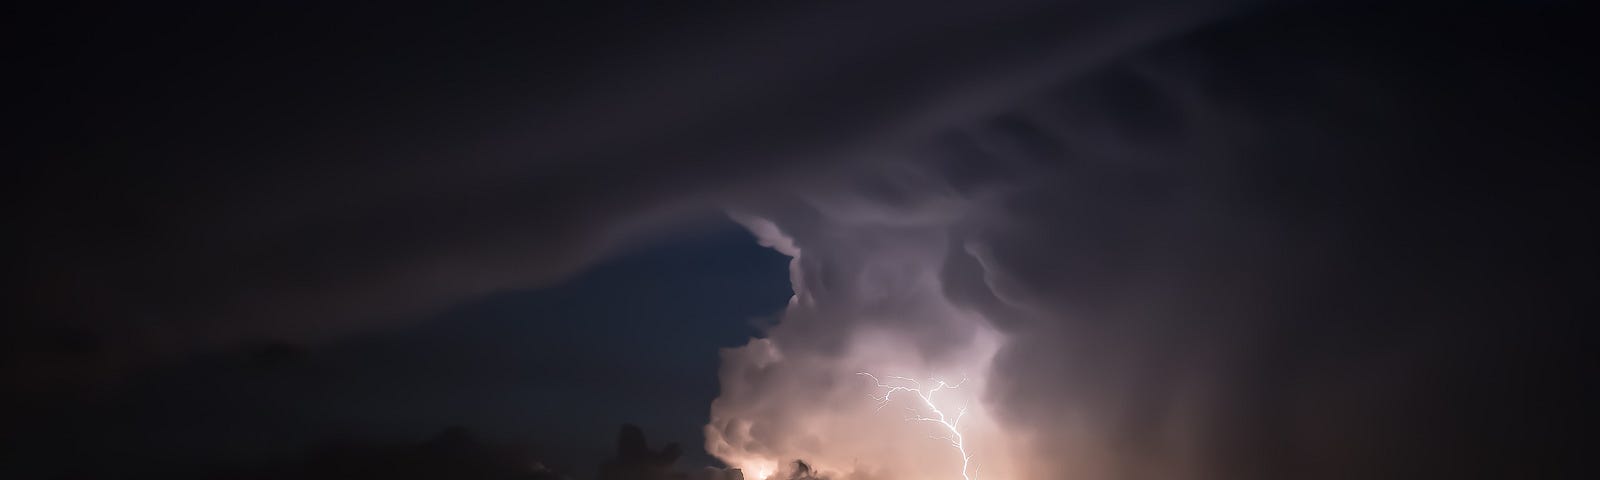 Lightning lights up a cloudy night